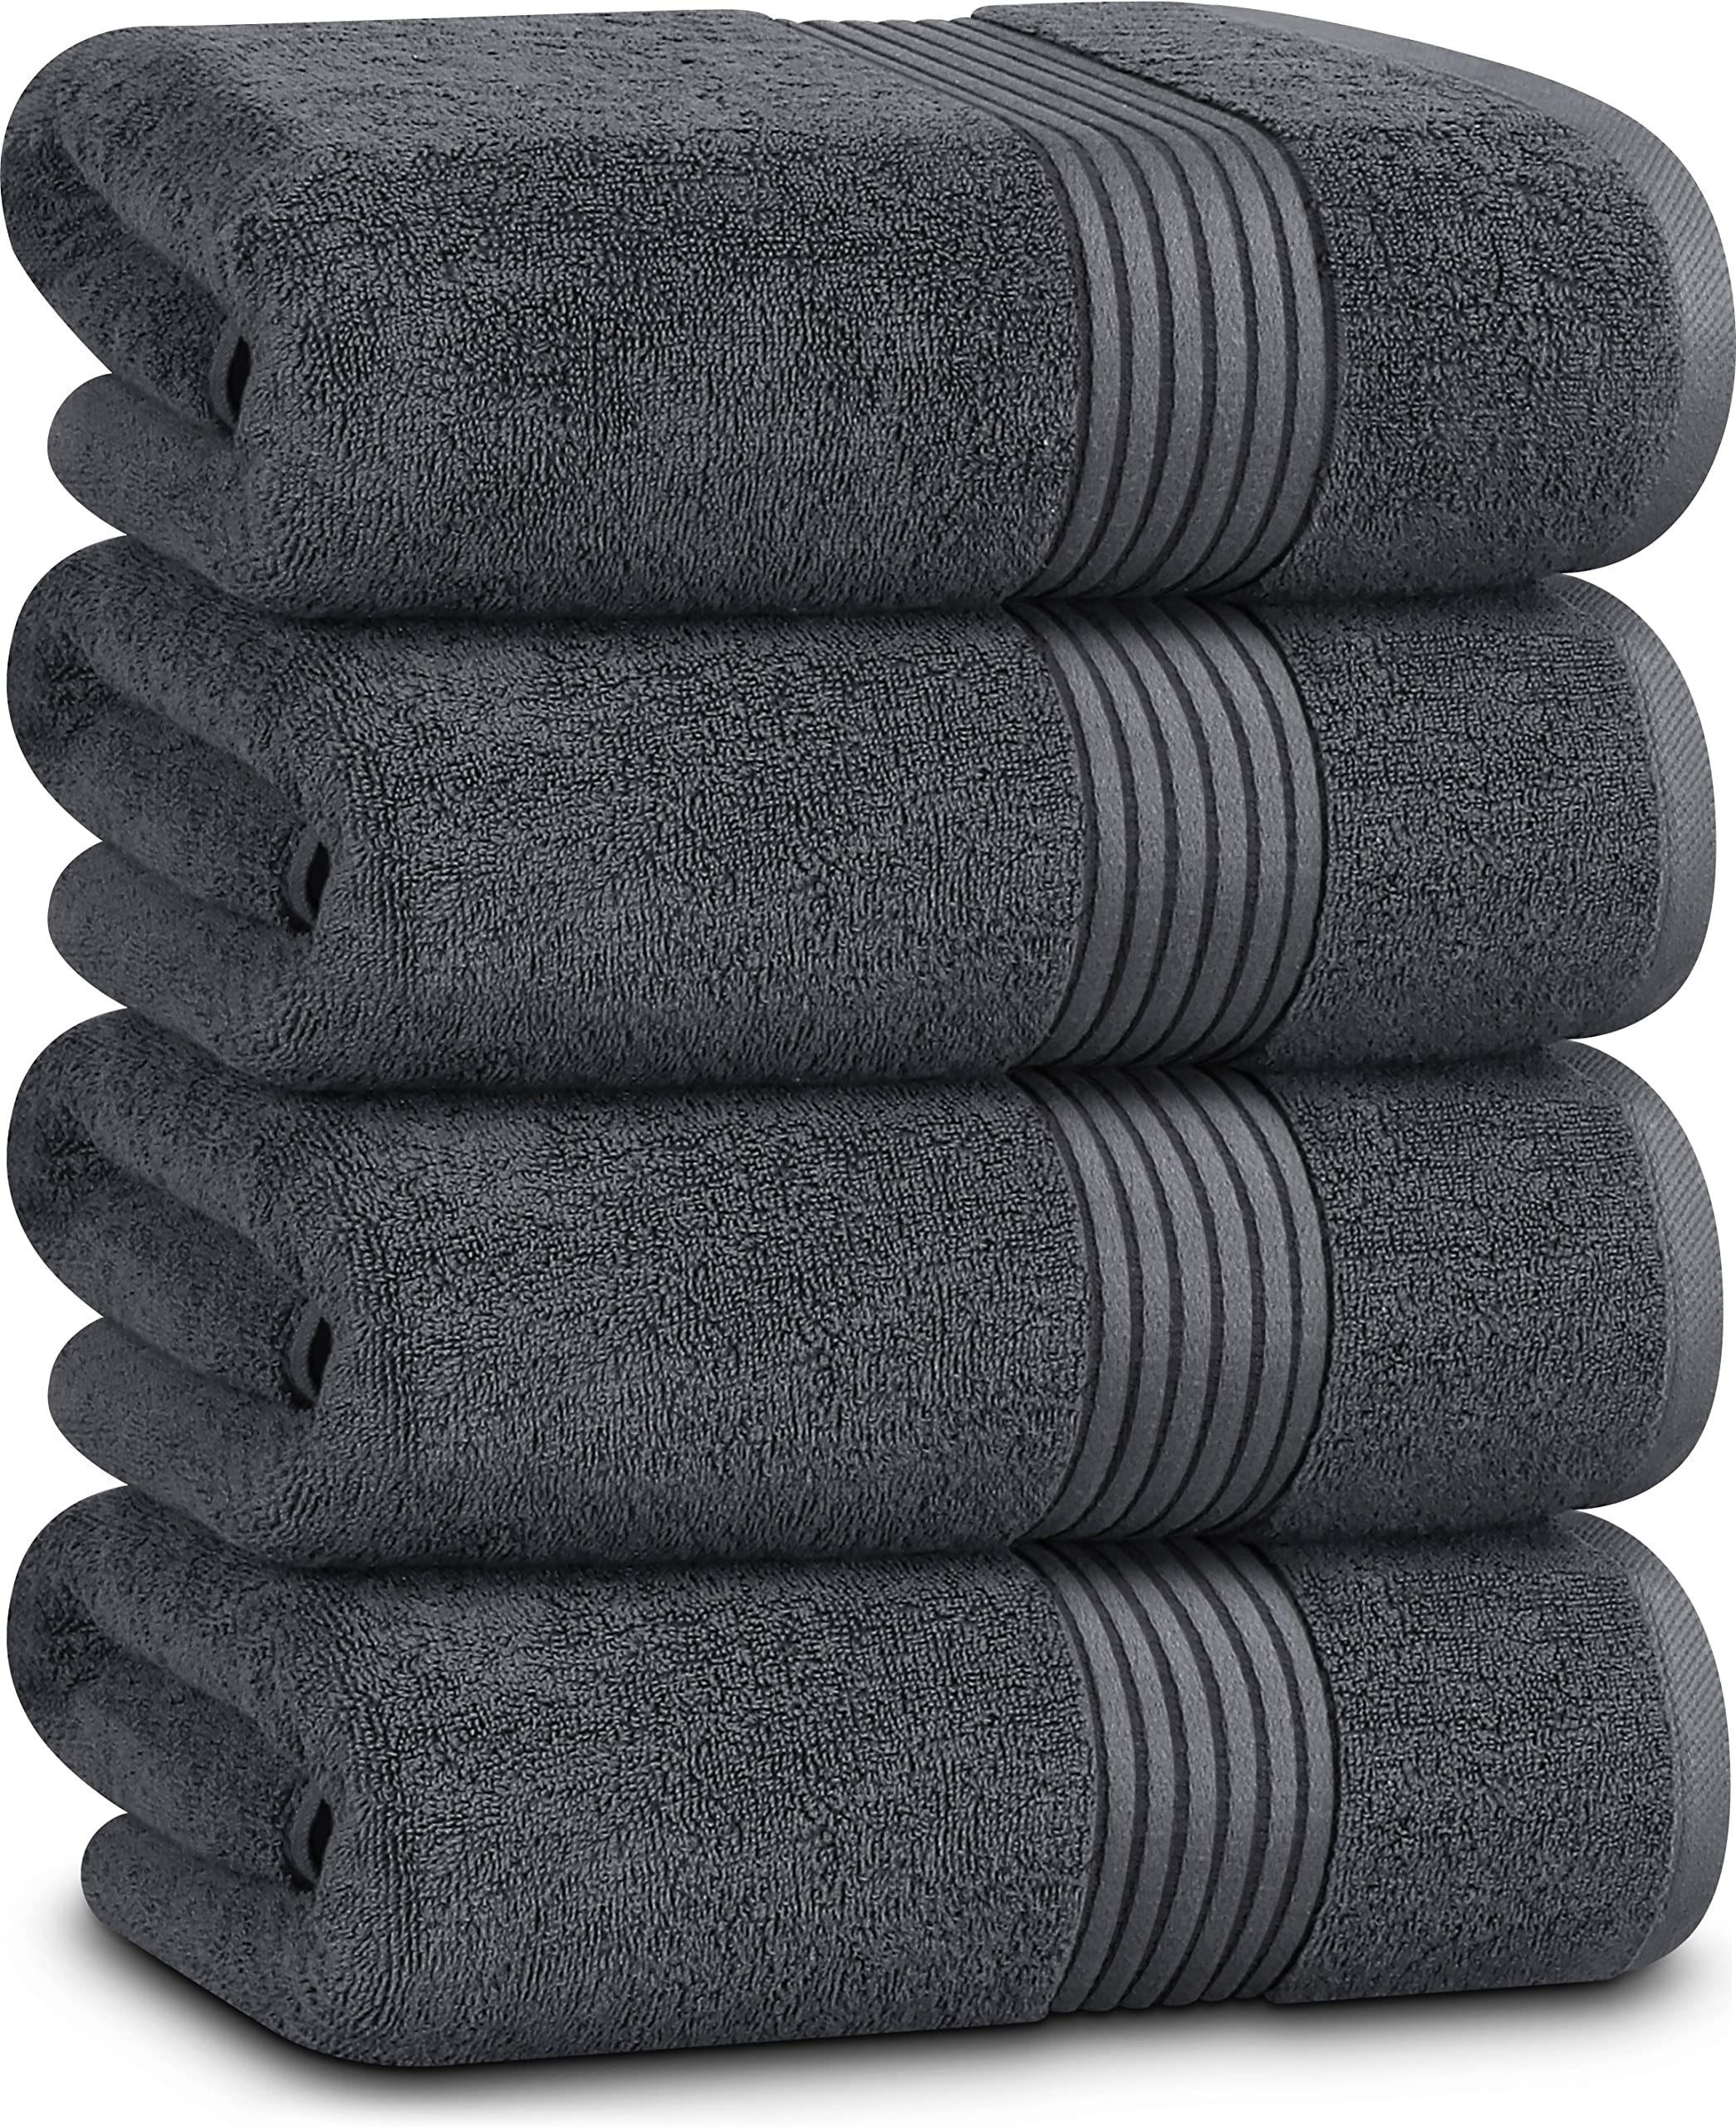 Utopia Towels 4 Piece Luxury Bath Towels Set, (27 x 54 Inches) 100